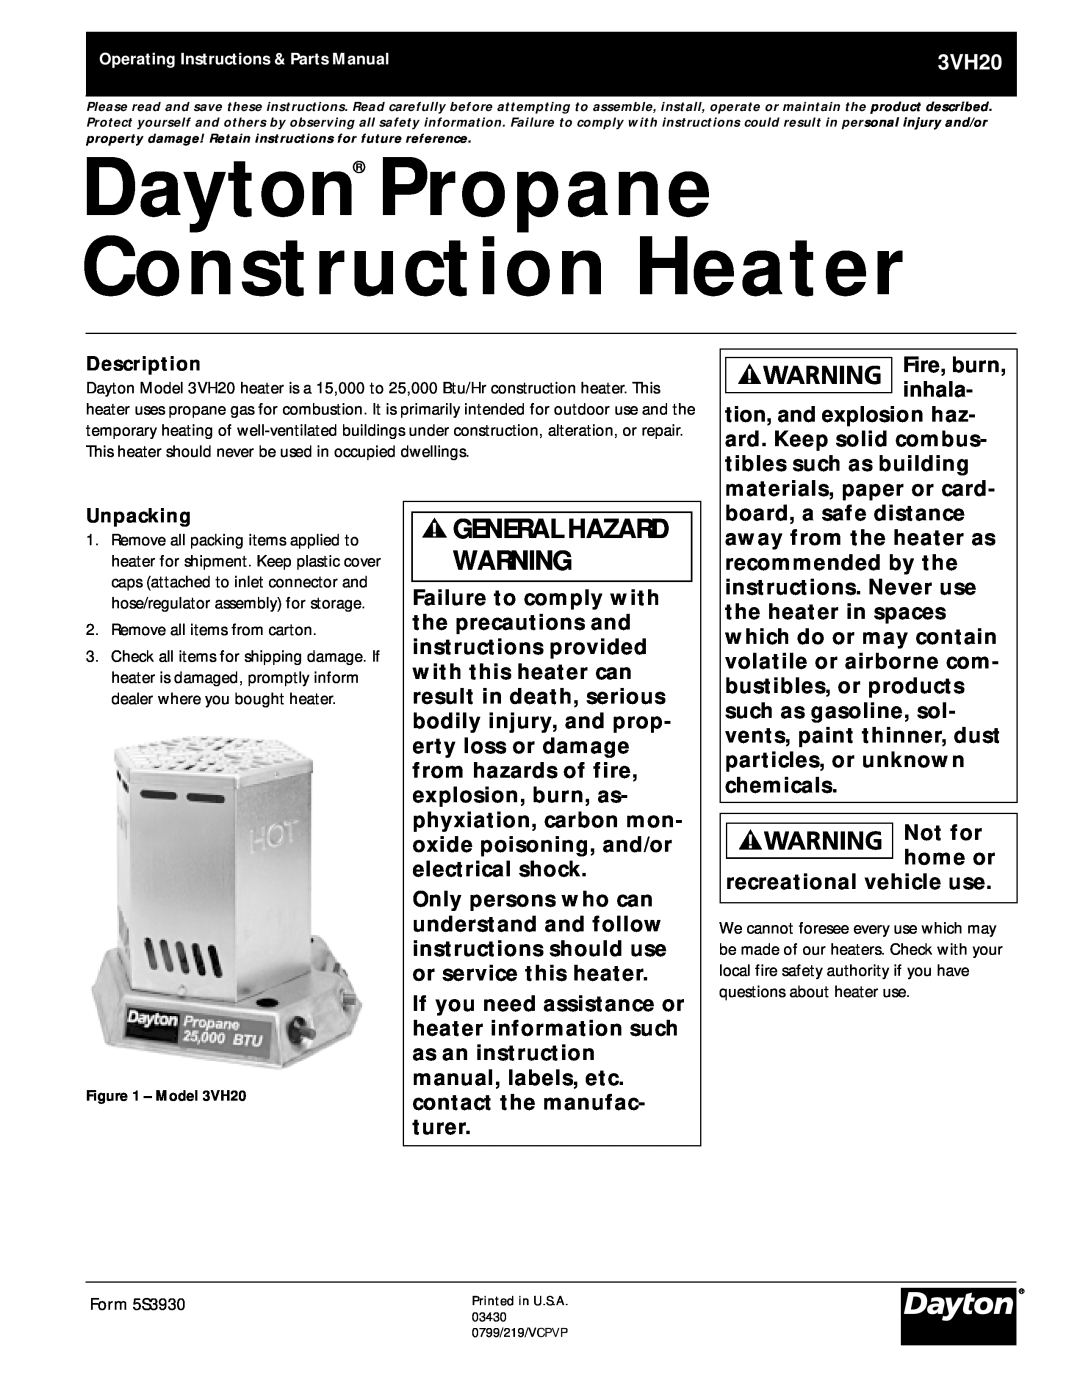 Dayton 3VH20 operating instructions Dayton Propane Construction Heater, General Hazard Warning 